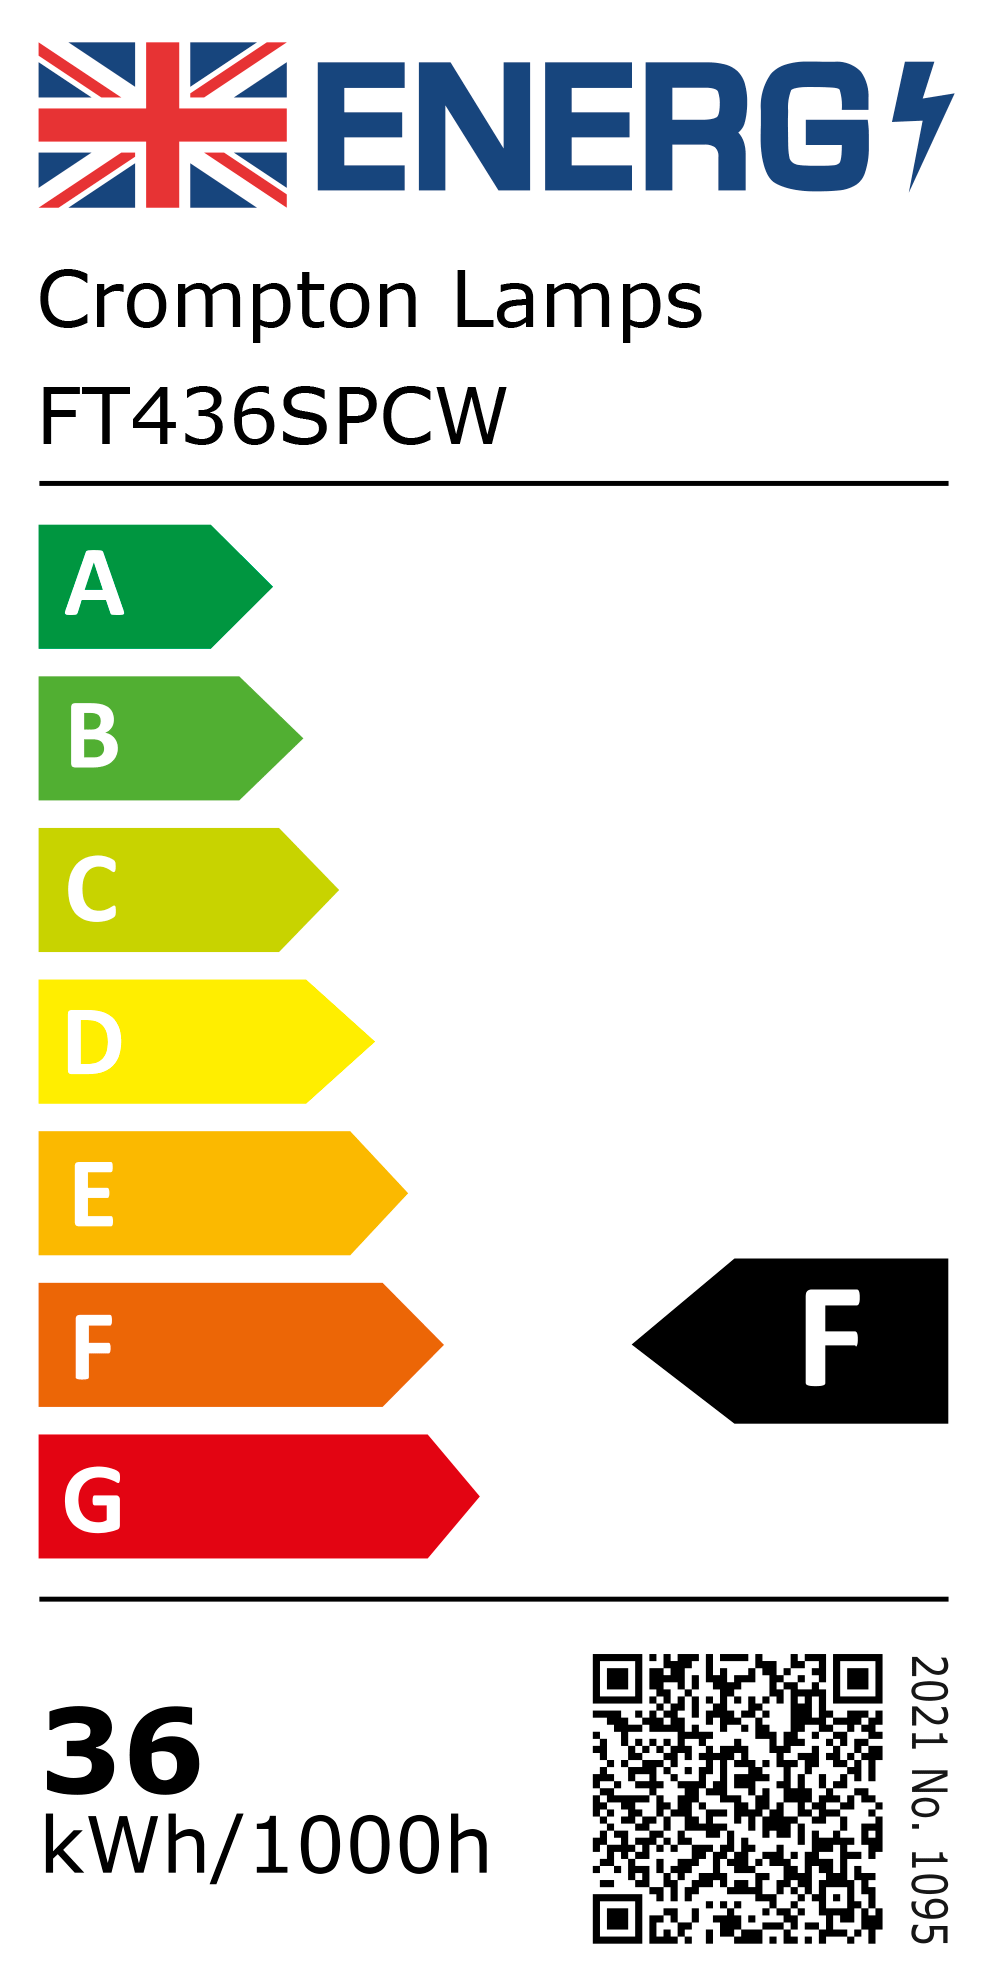 New 2021 Energy Rating Label: Stock Code FT436SPCW